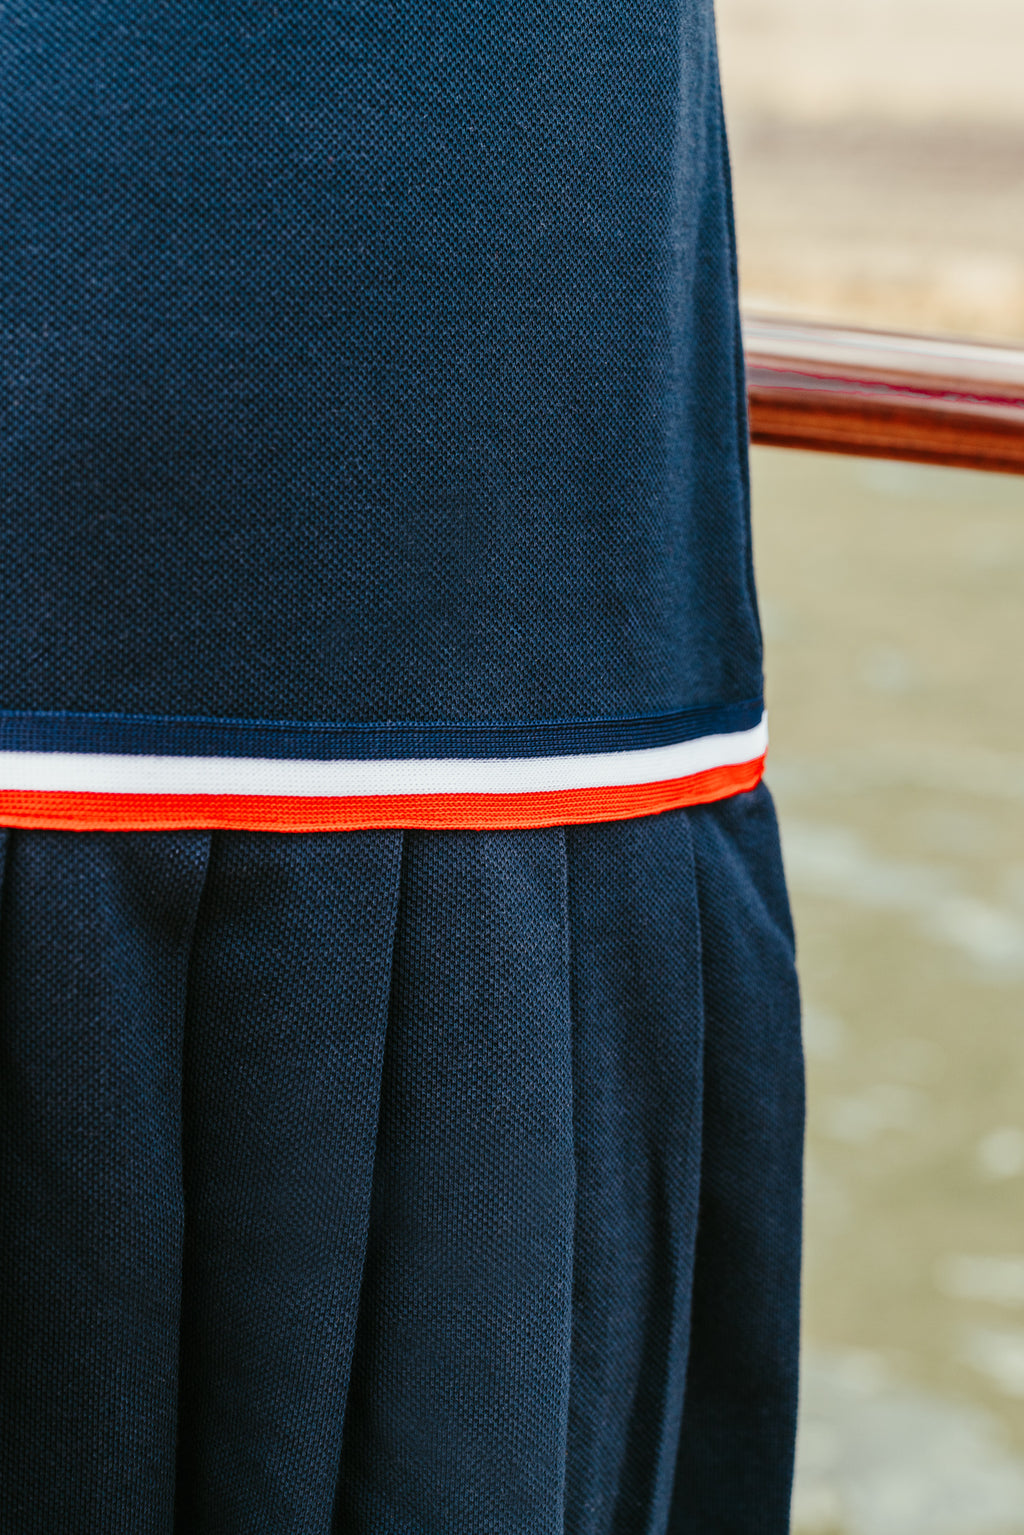 Dress - Pique marine mesh polo shirt